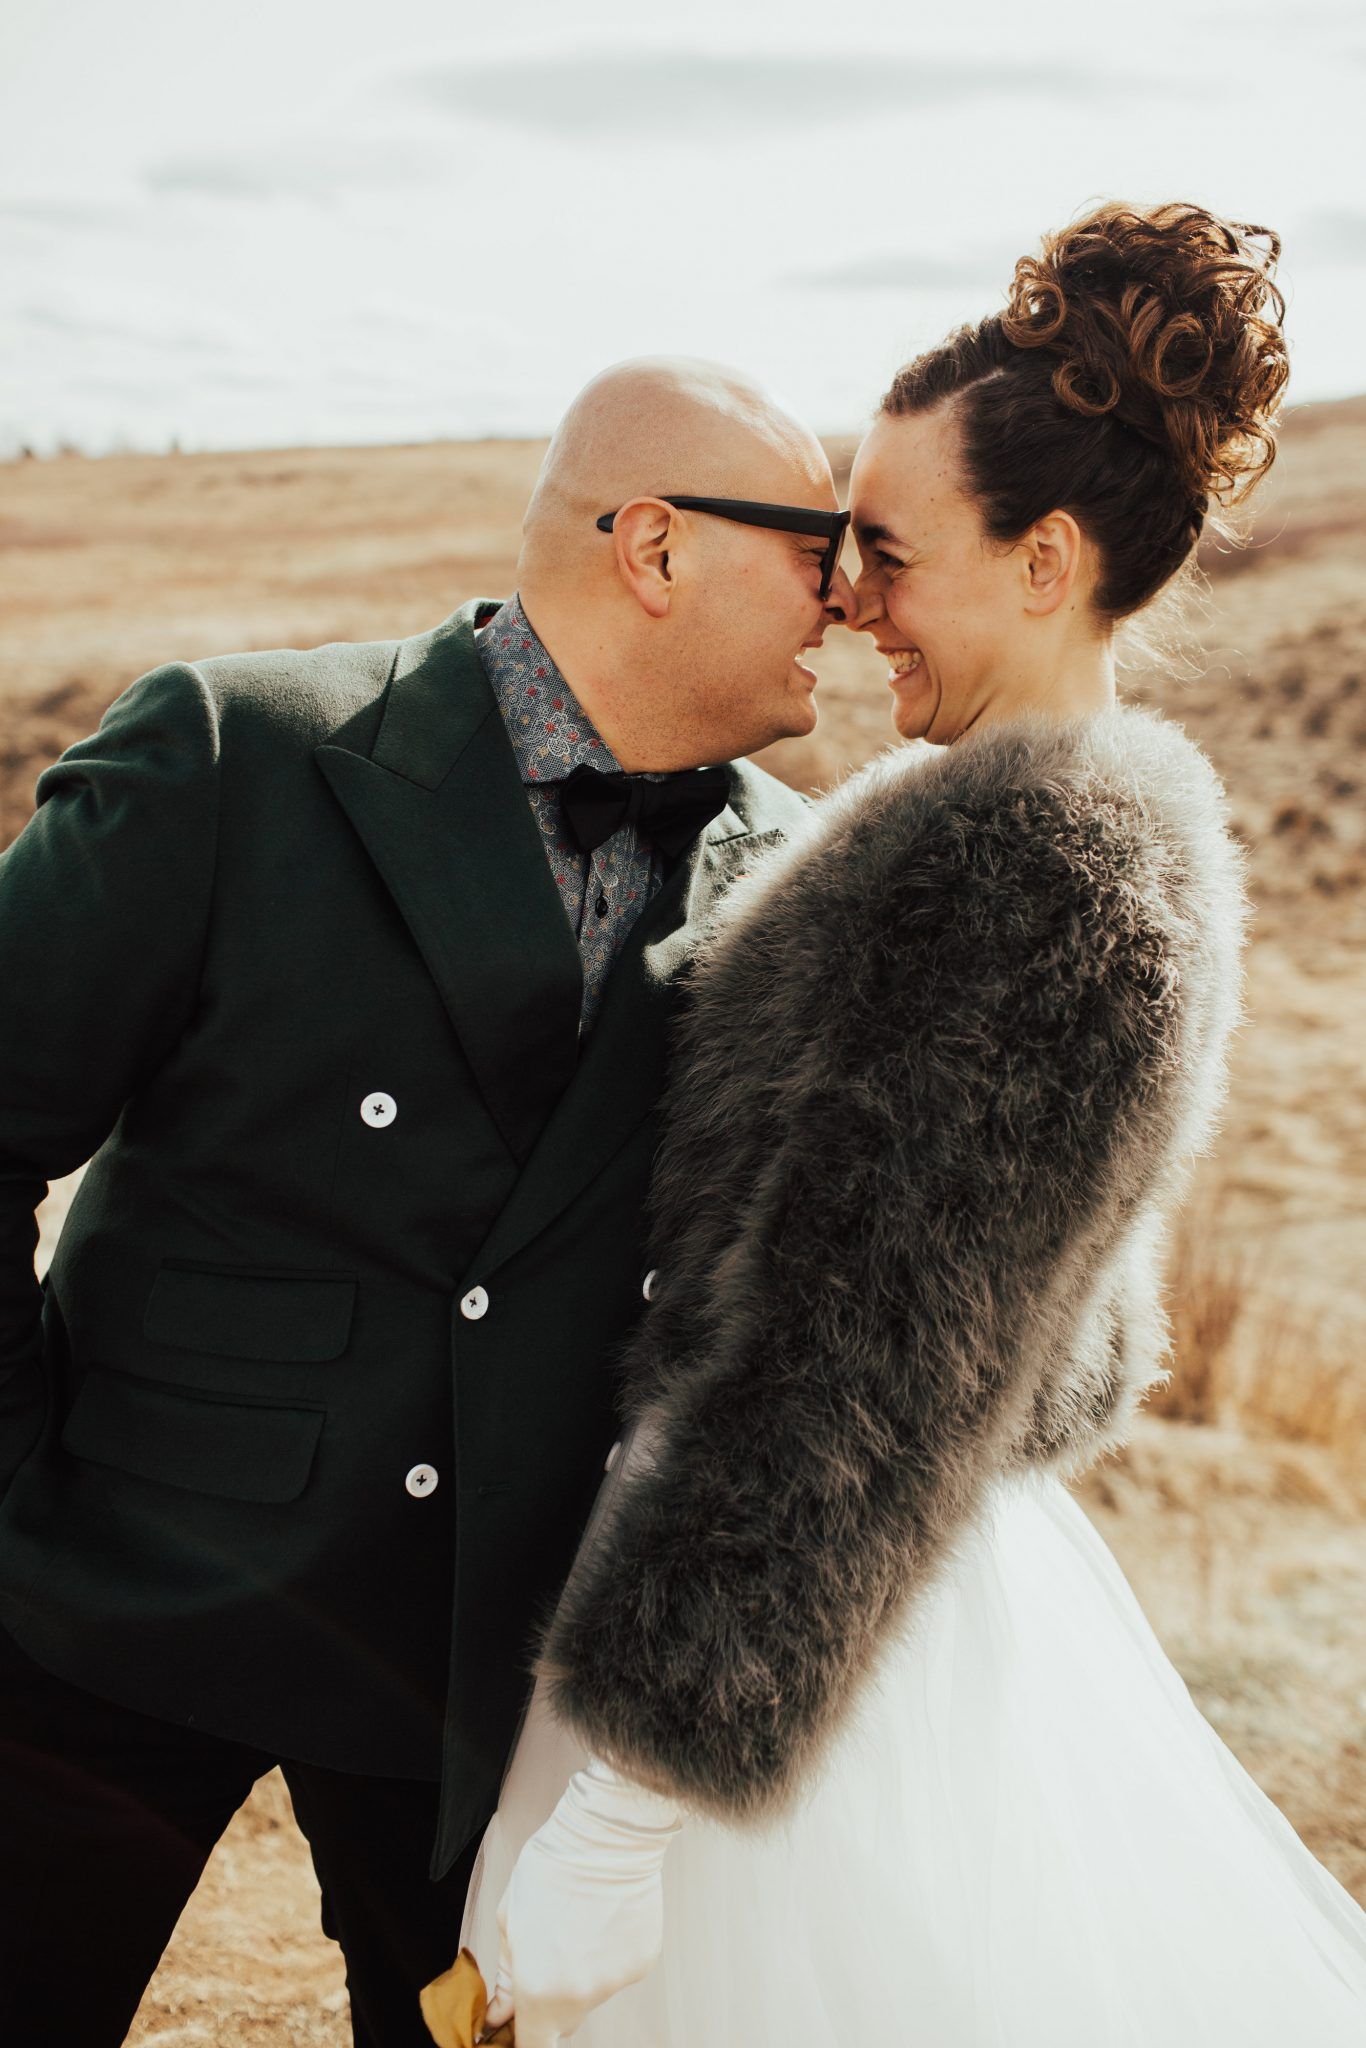 Looking Dapper: 10 Looks for the Modern Groom - on the Bronte Bride Blog, groom style, Calgary Wedding Inspiration Blog, black suit